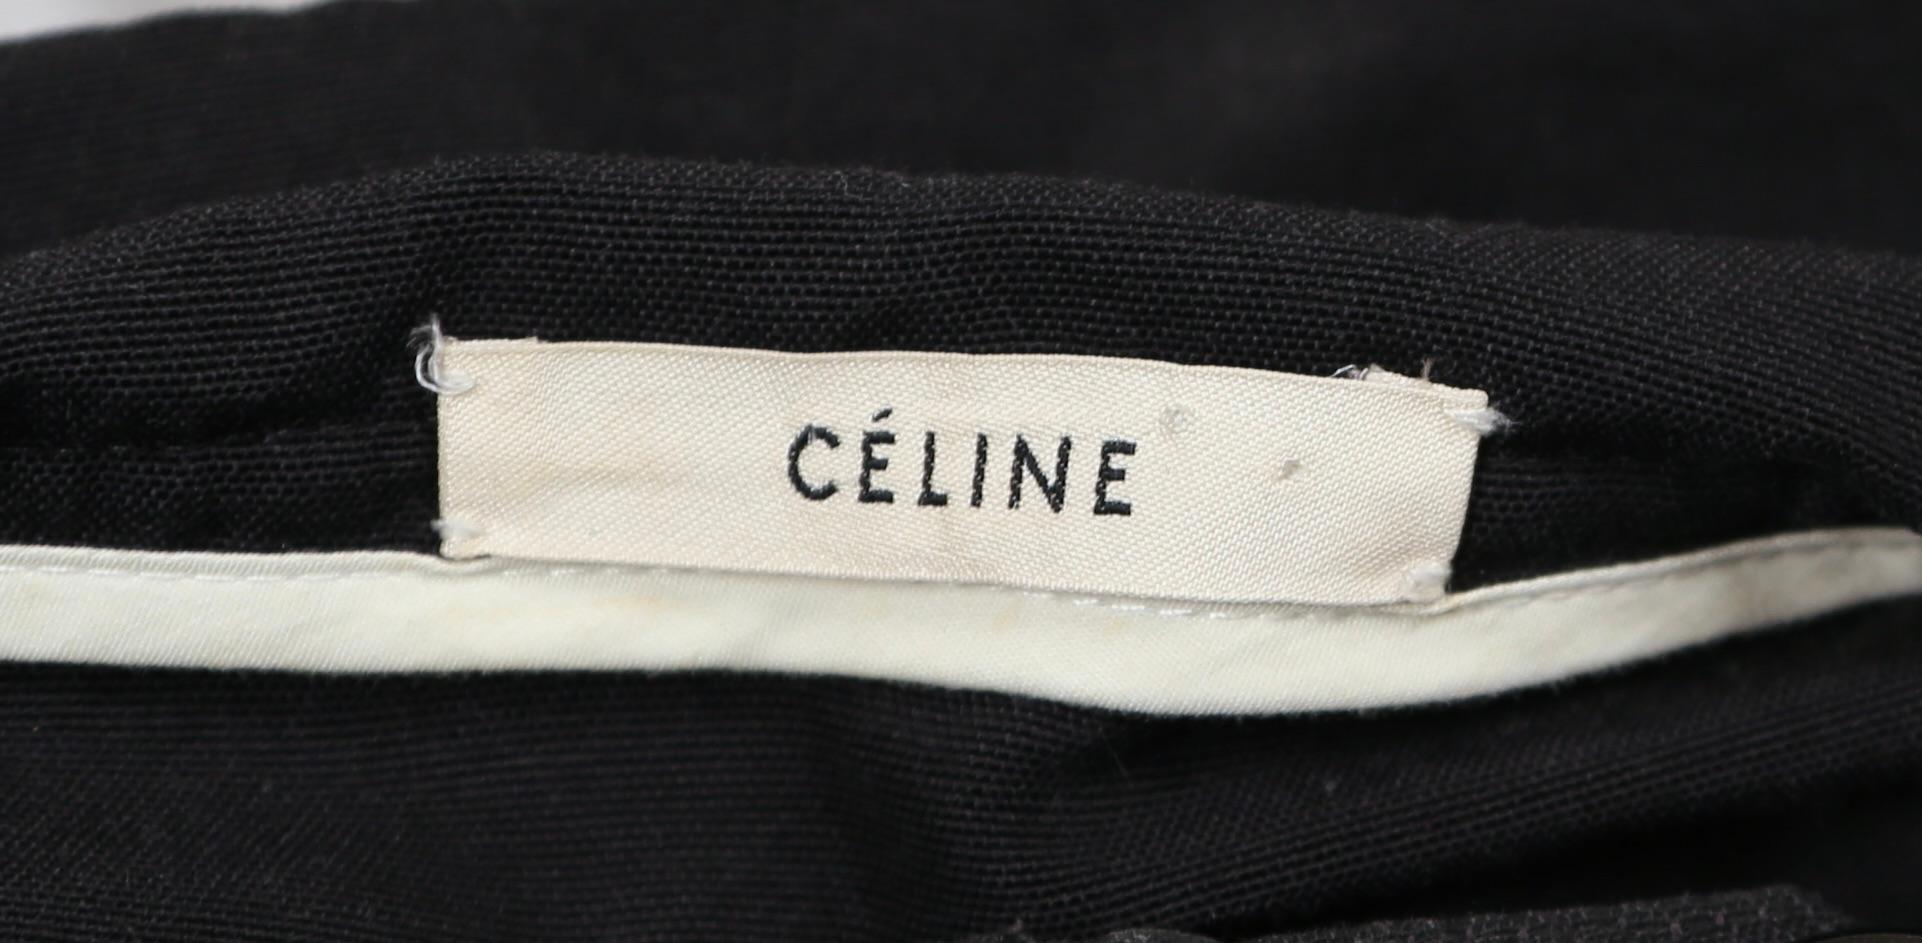 Celine by PHOEBE PHILO Veste anorak bleu marine profond en coton 2011 en vente 3